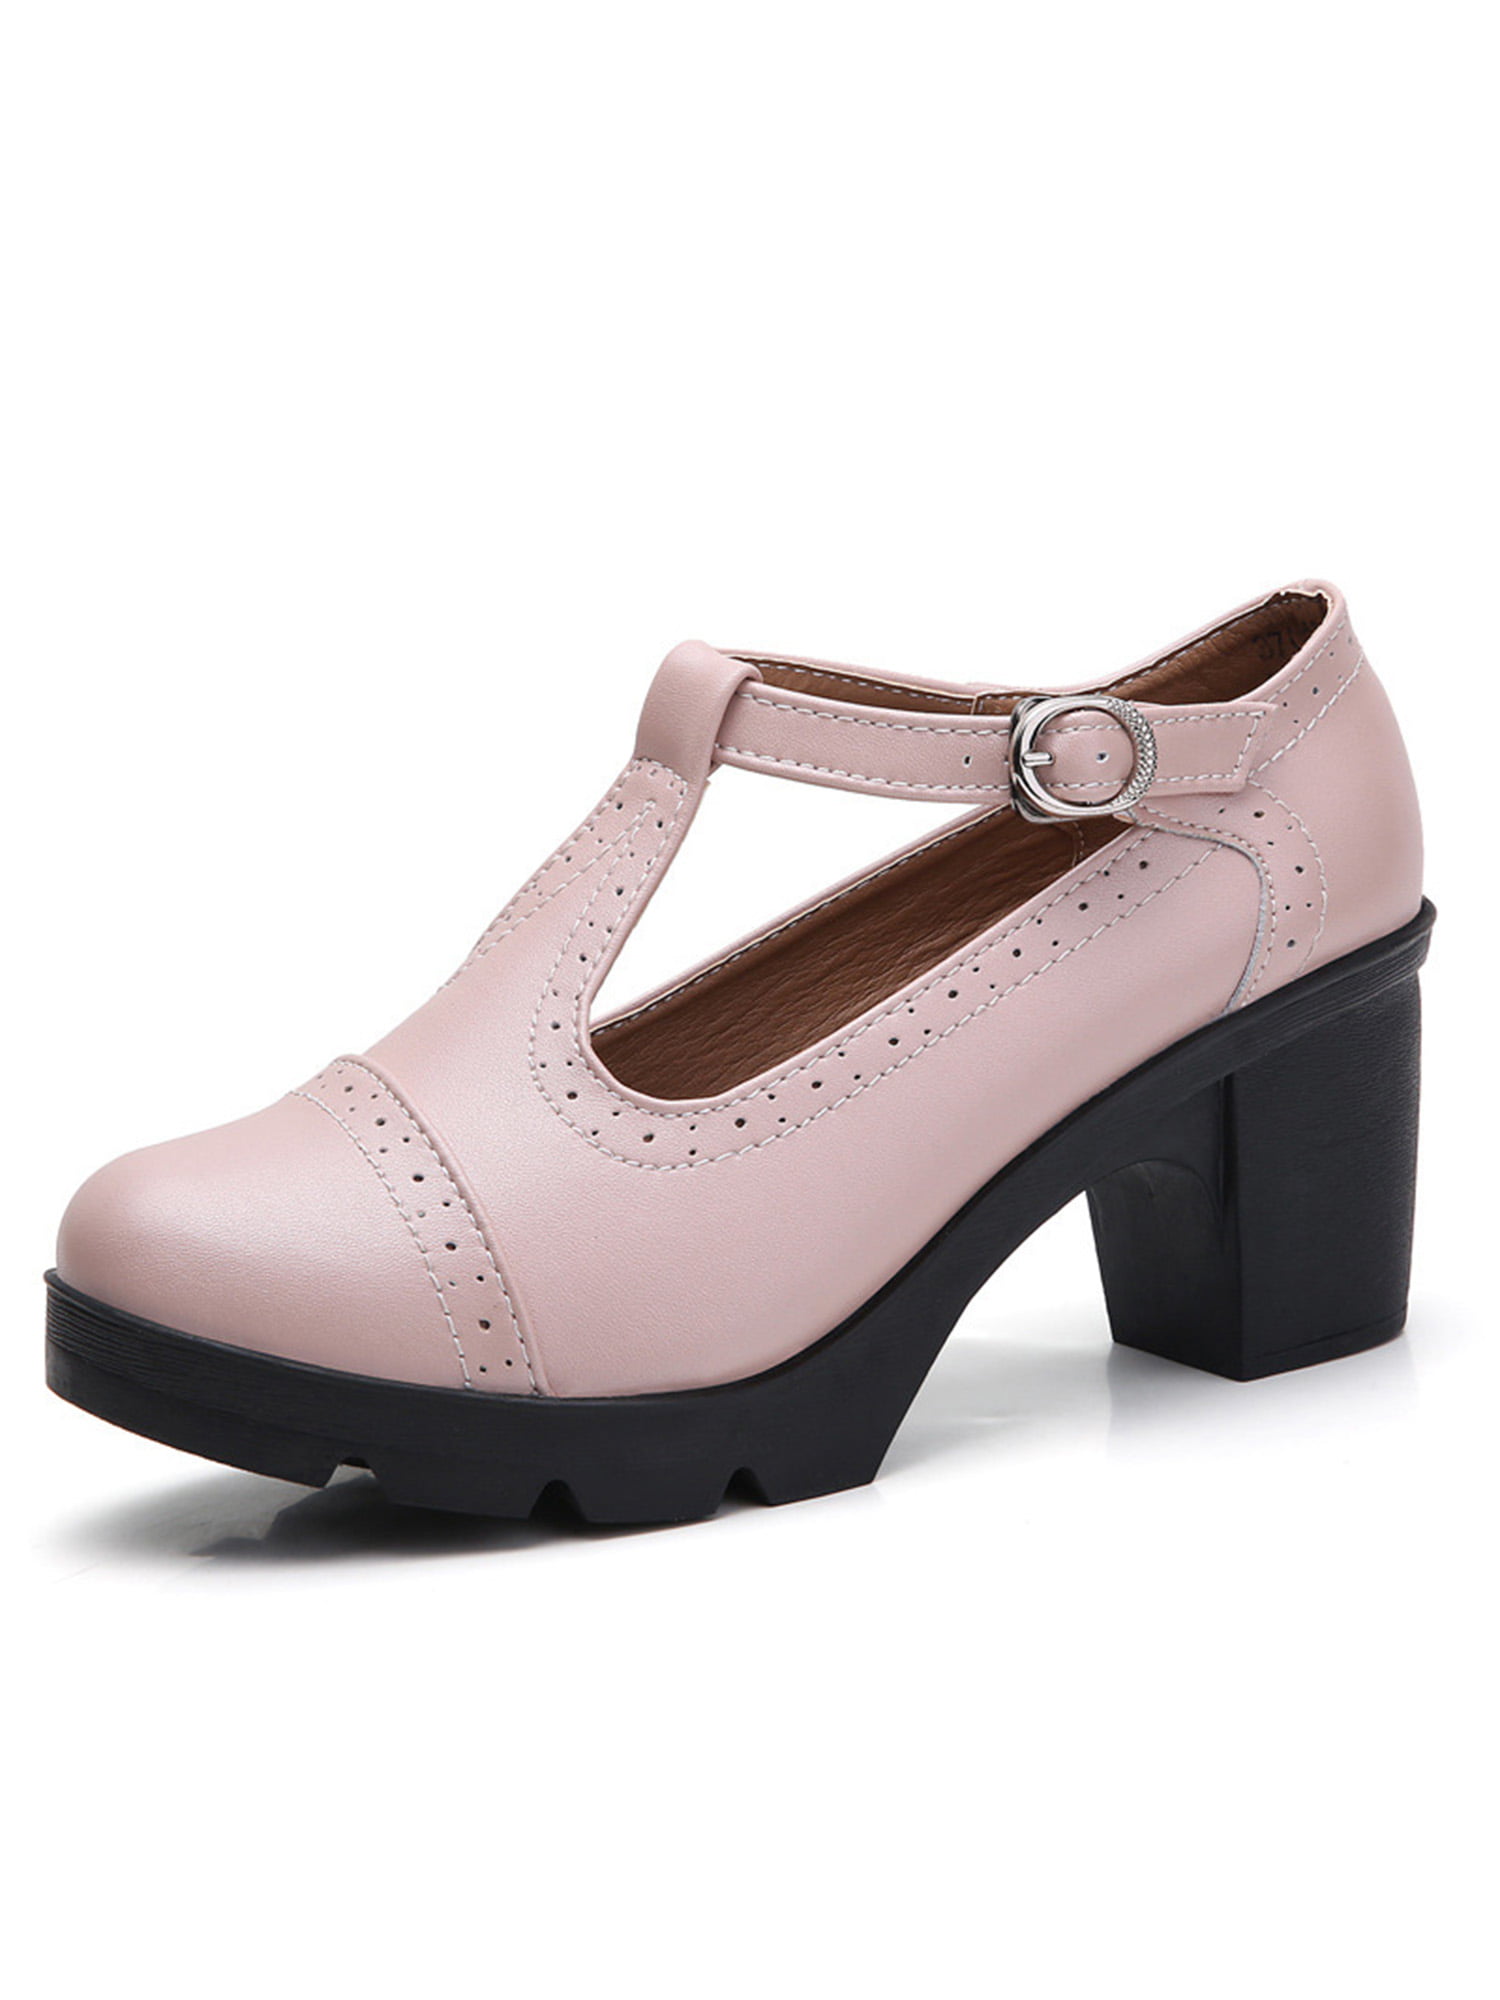 DADAWEN Women's Platform Block Heel Oxford Mary Jane Low Shoes Classic Dress Shoes 